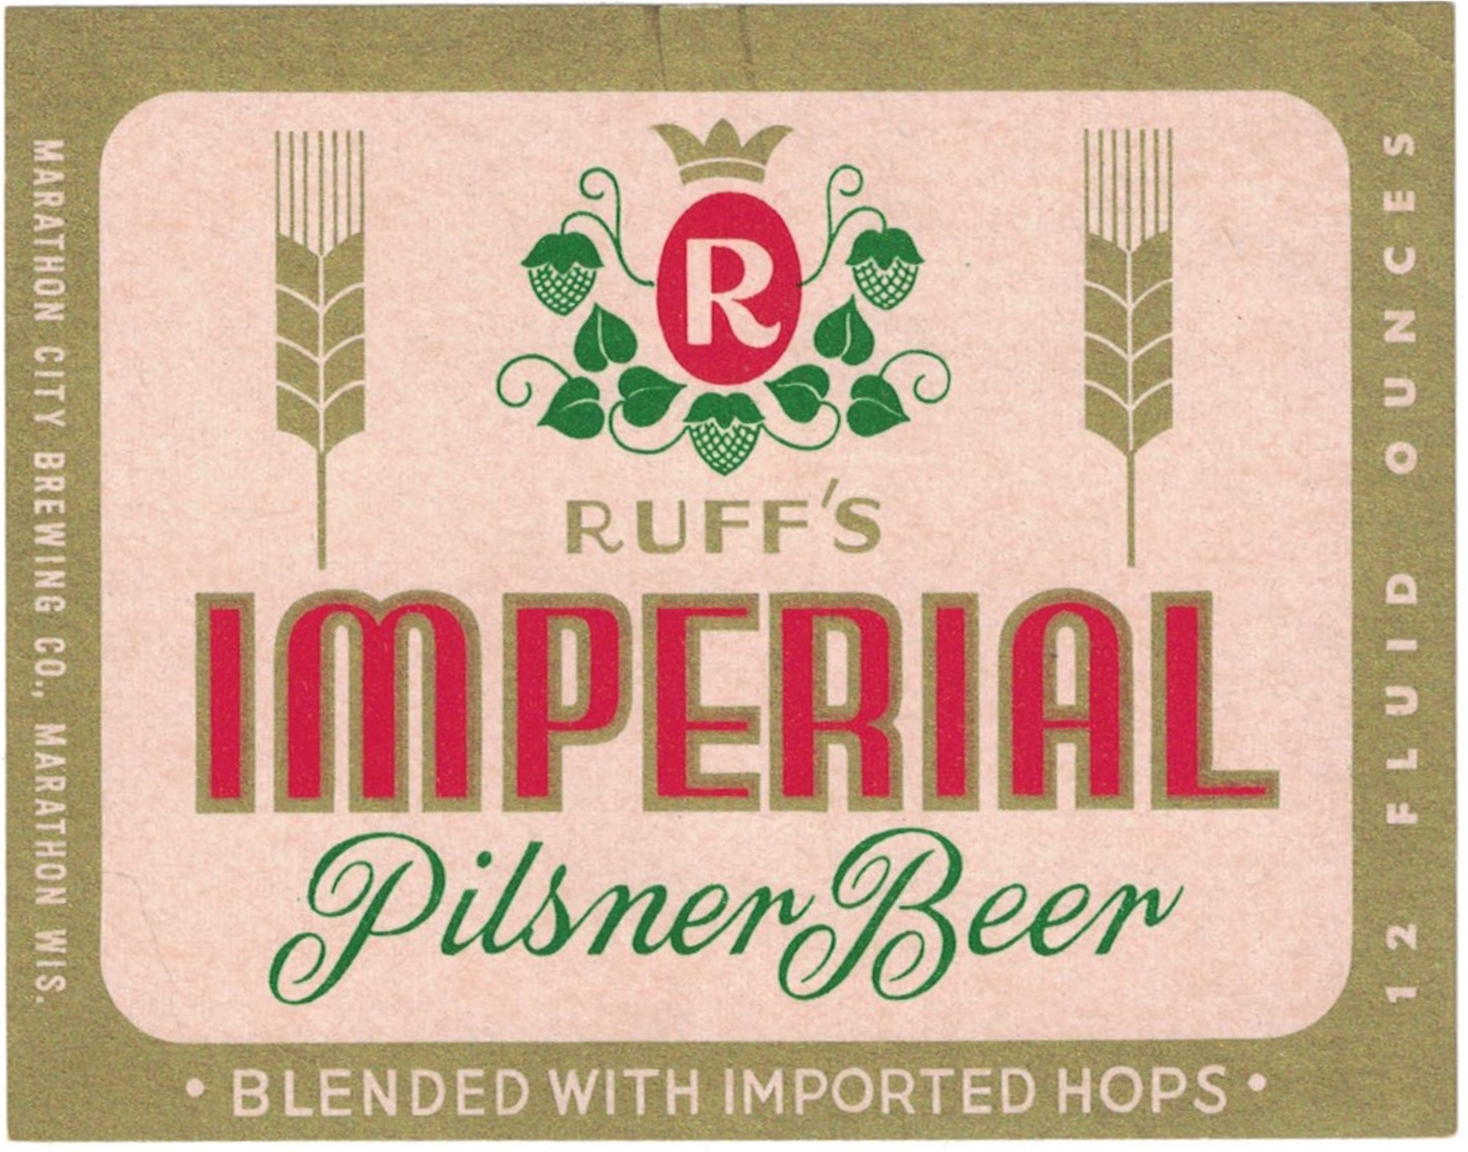 Ruff's Imperial Pilsner Beer Label